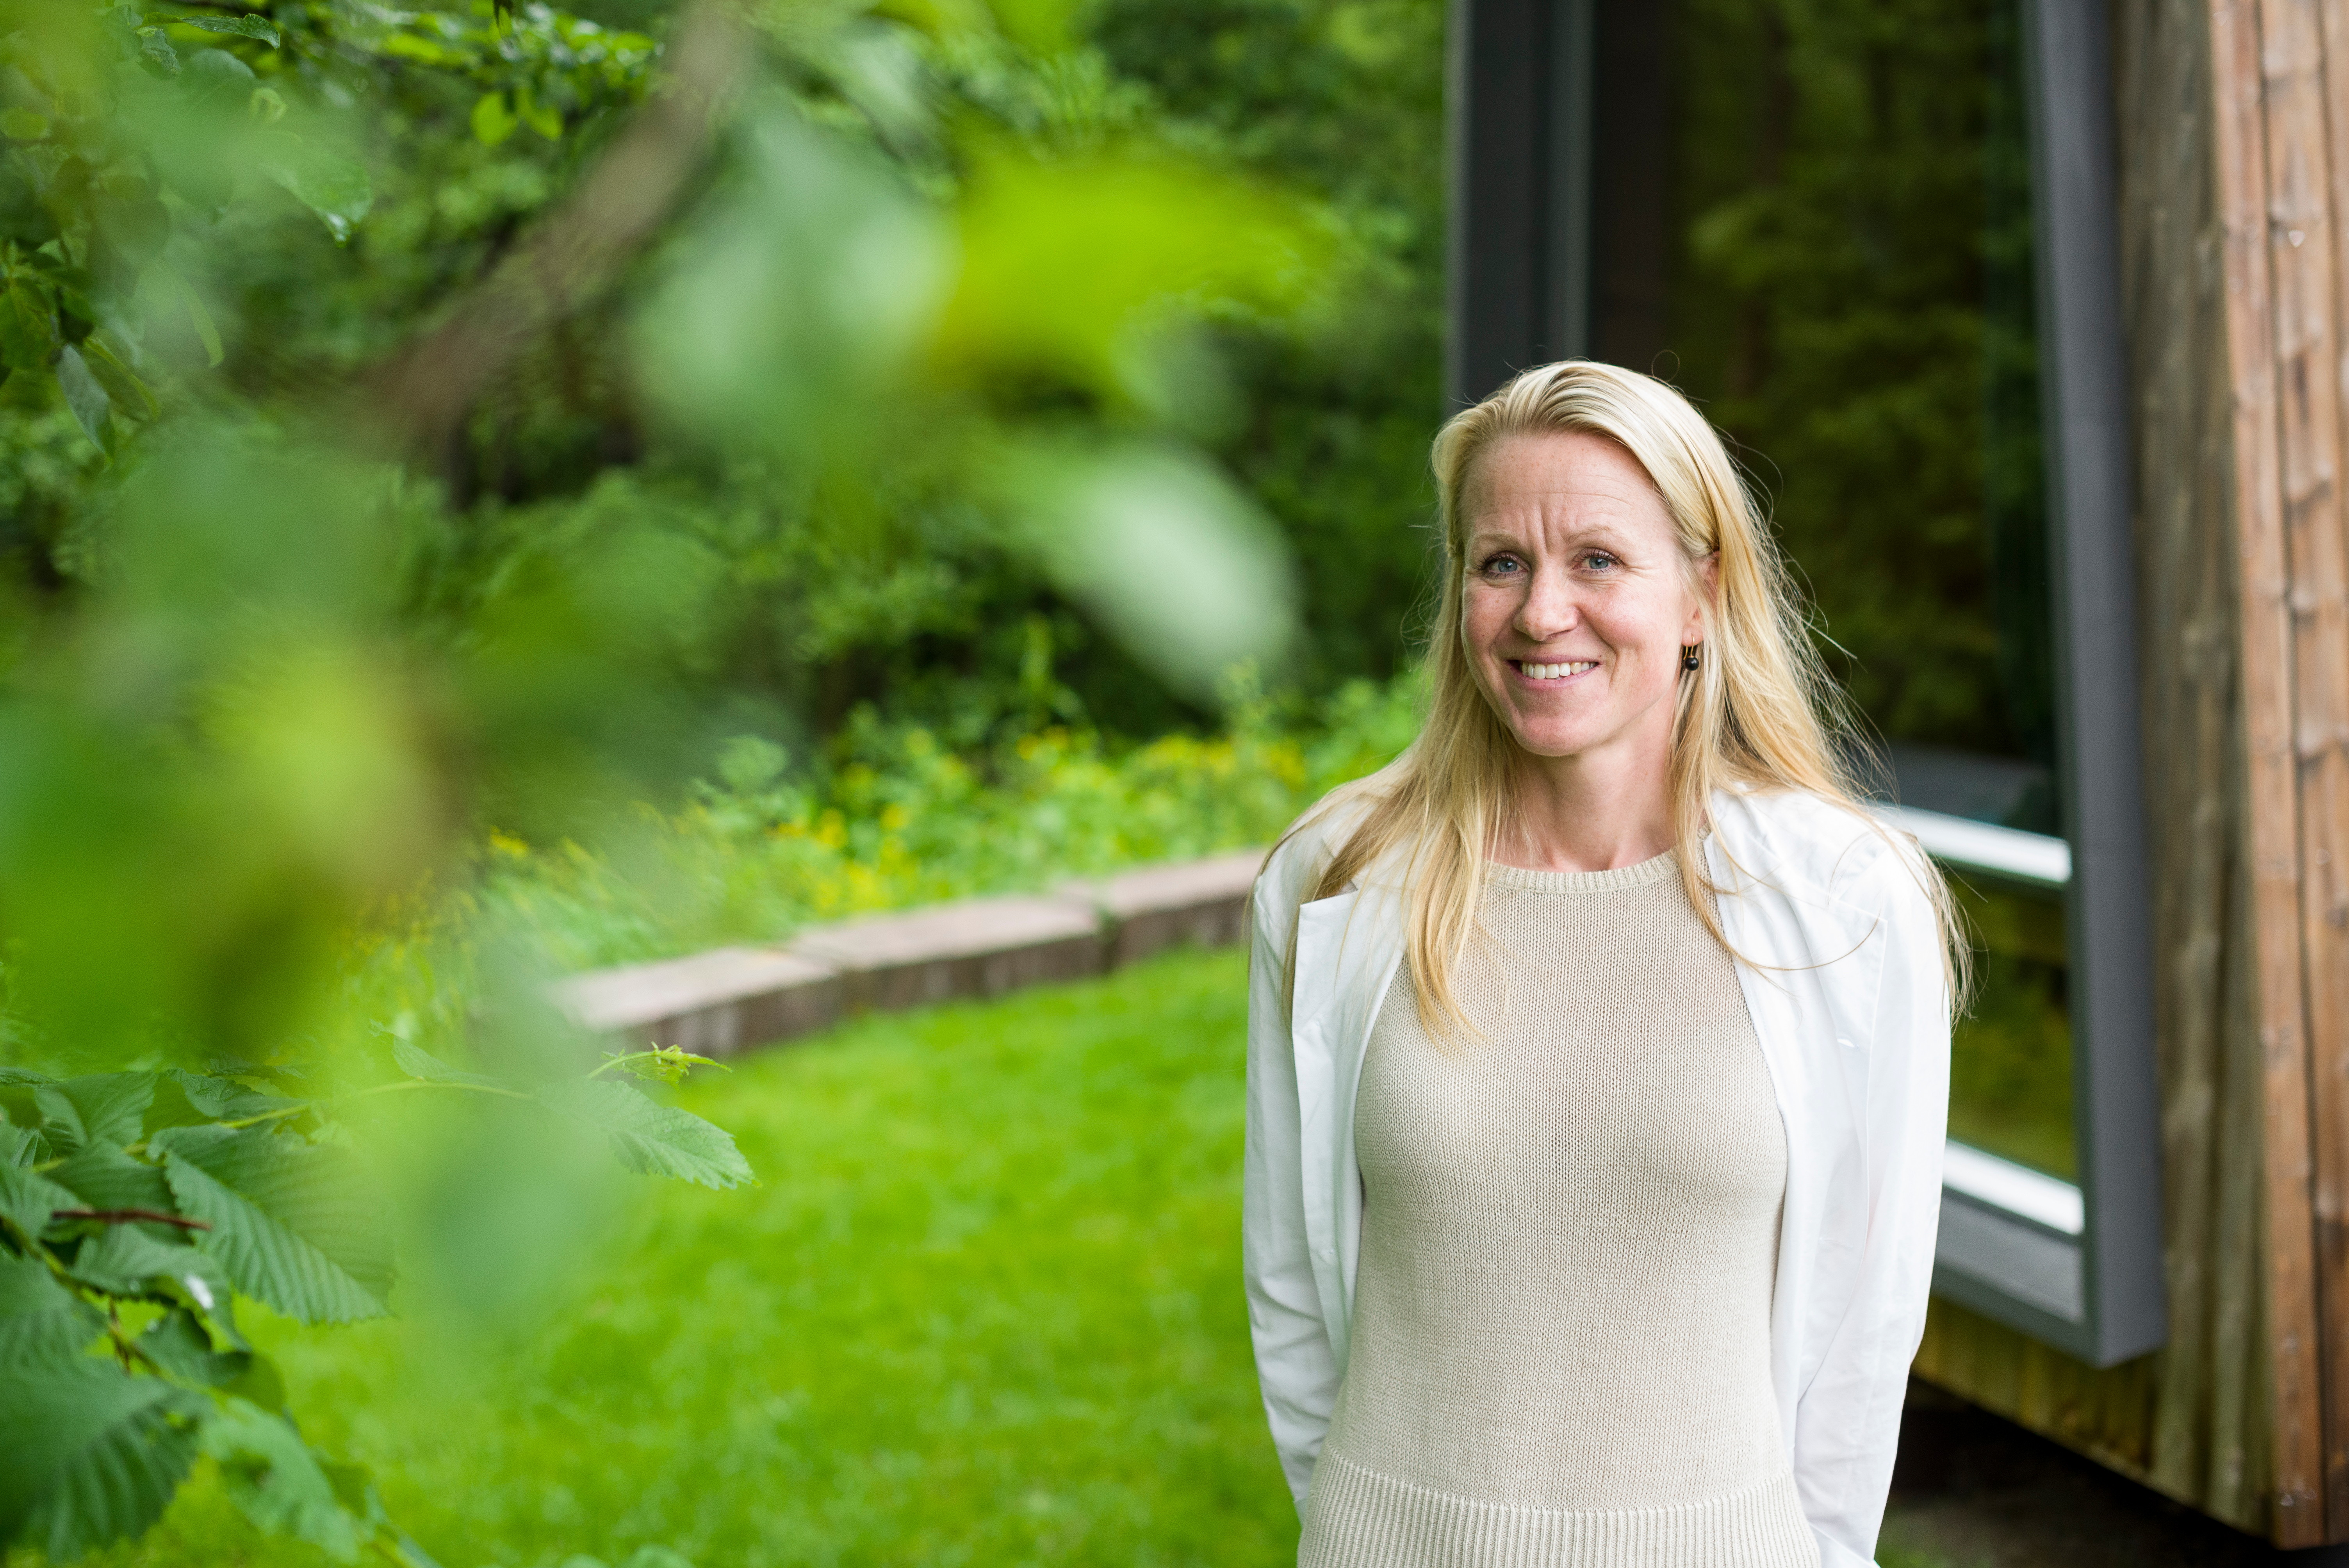 Barnepsykolog Maren Lindheim er en av initiativtakerne til Friluftssykehuset, som donerer arkitekttegnede hytter til sykehus i Norge.